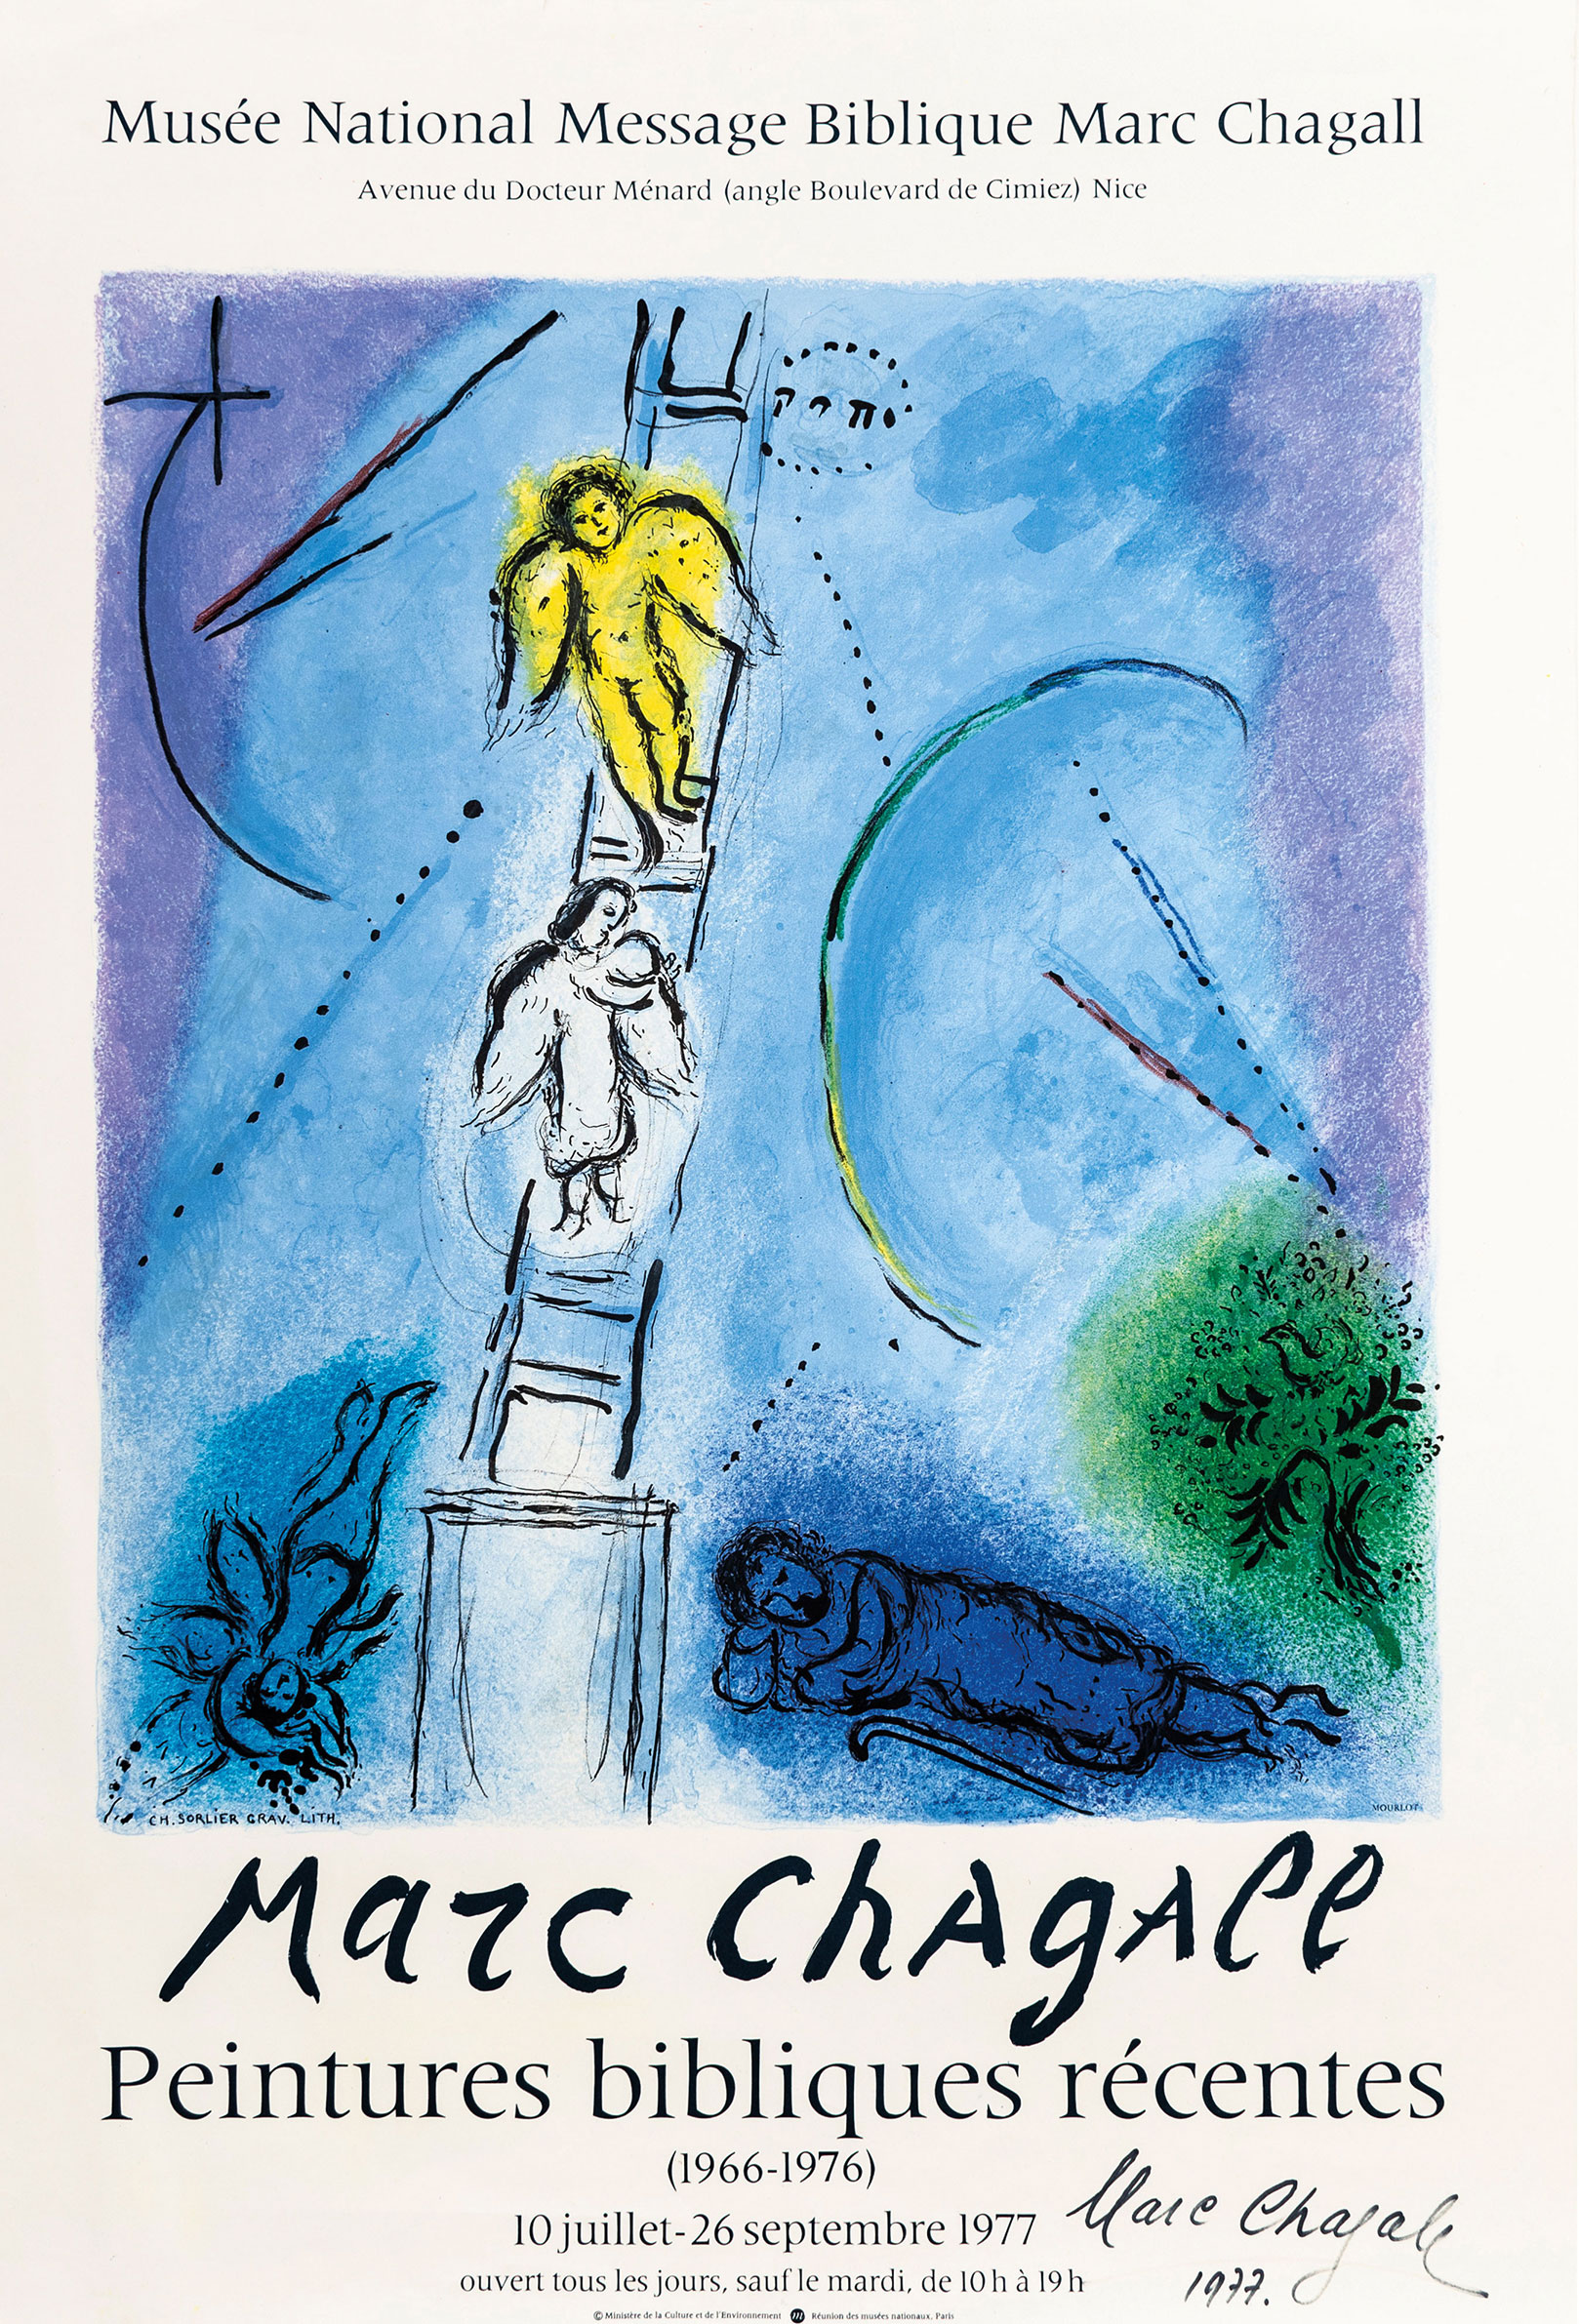 MARC CHAGALL (1887 Vitebsk - 1985 Saint-Paul-de-Vence)